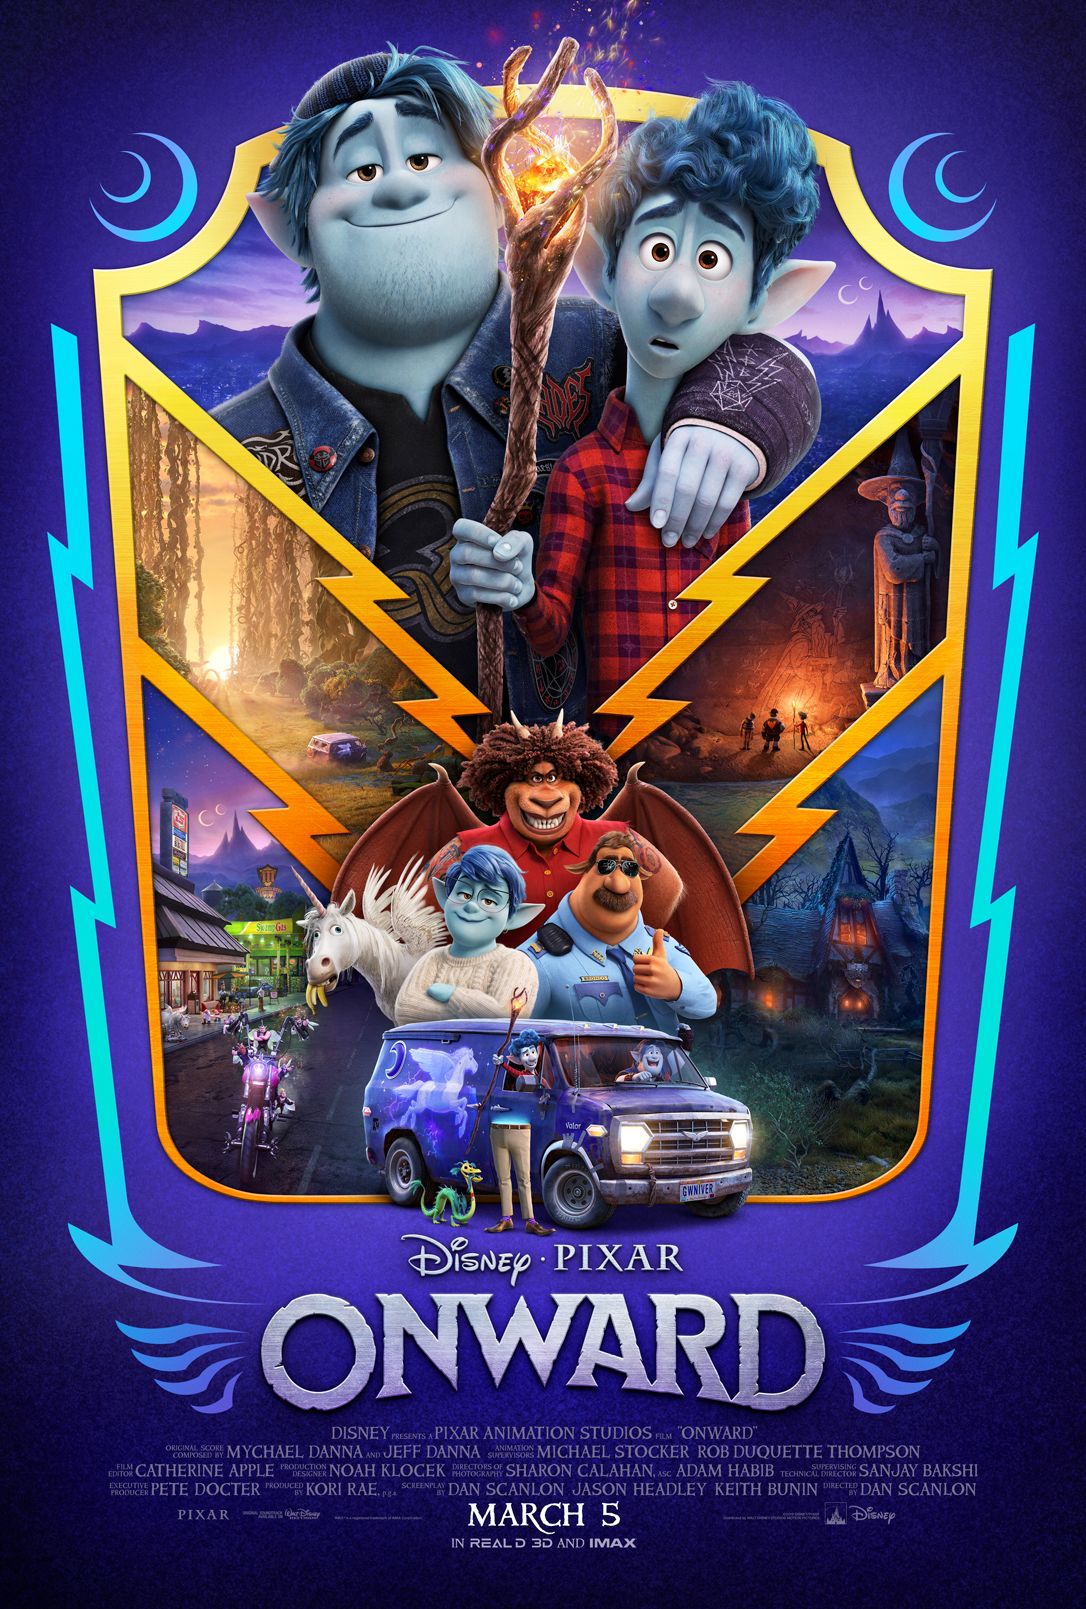 Disney Pixar Onward Official Poster